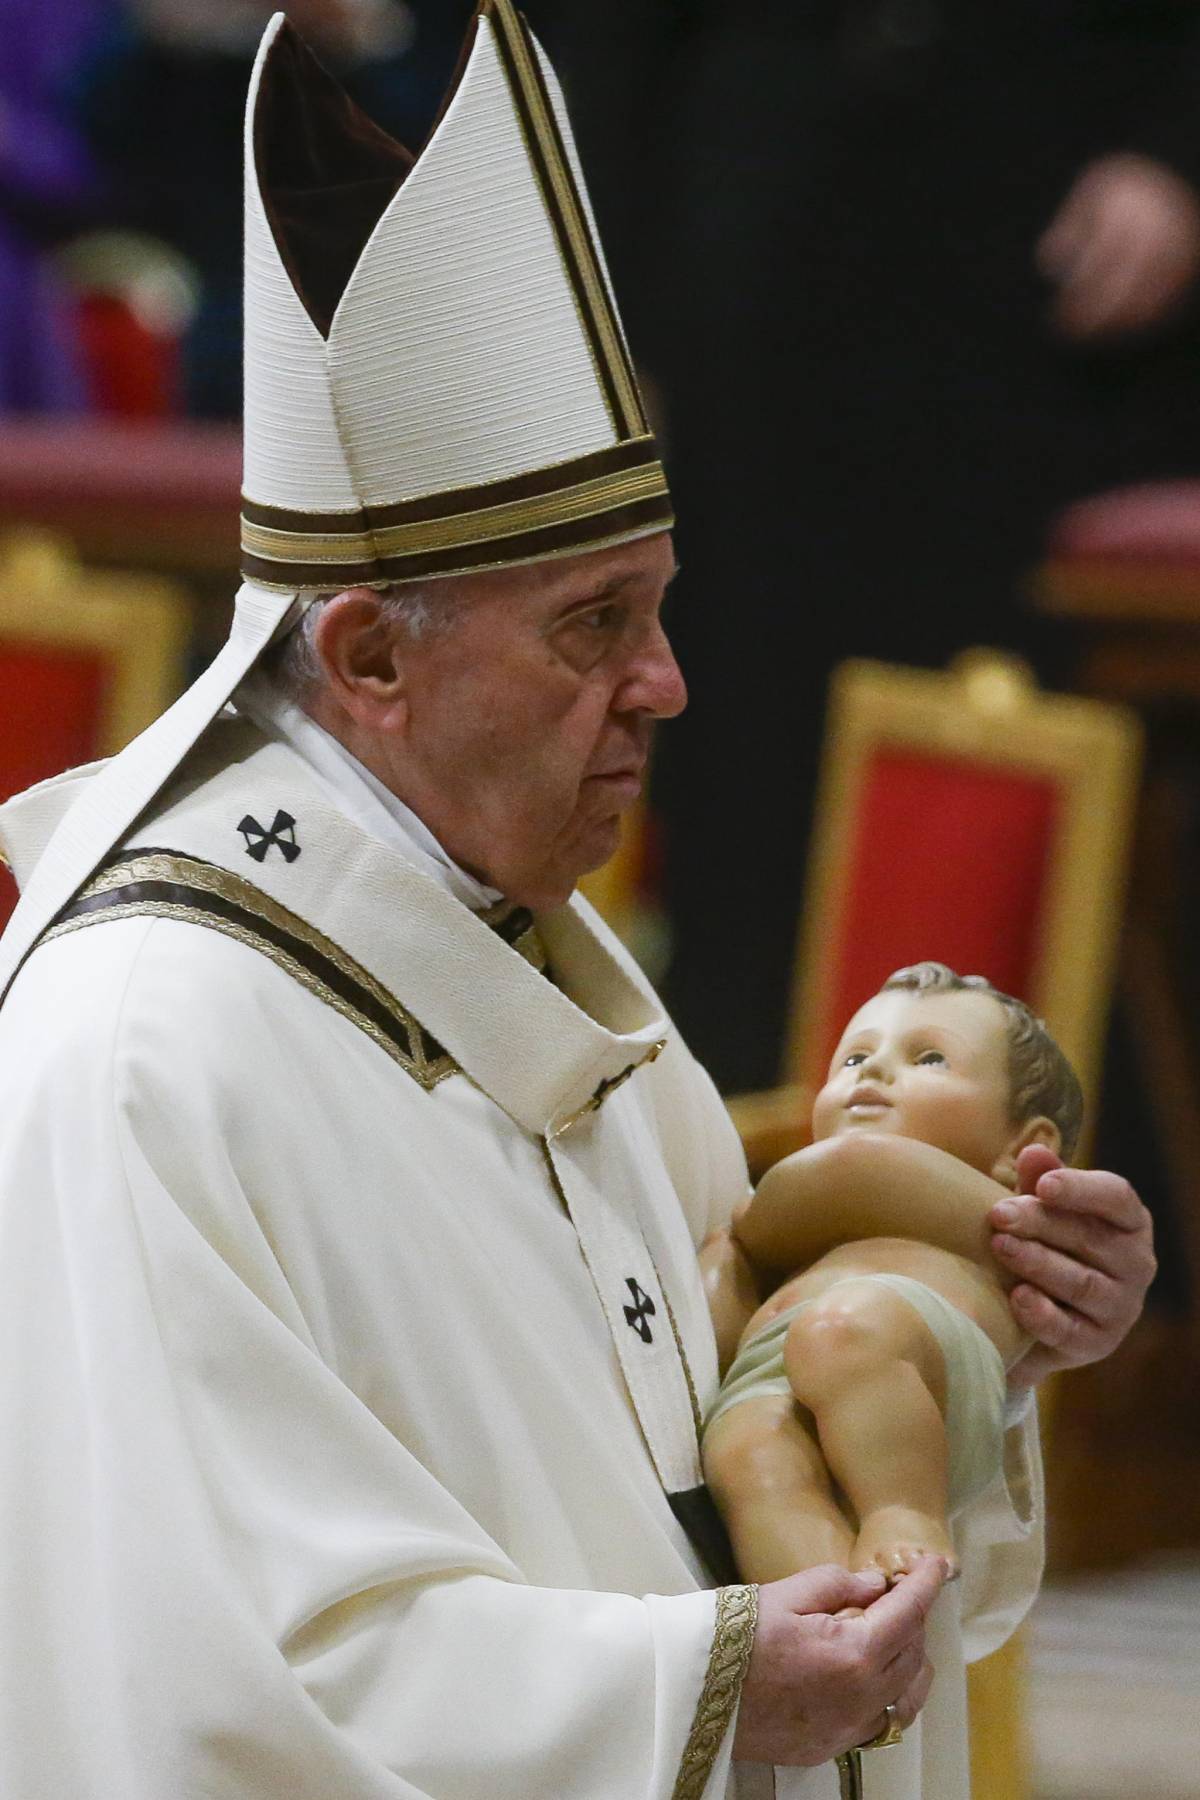 Niente riforma della Curia: la rivoluzione del Papa sparisce dai radar